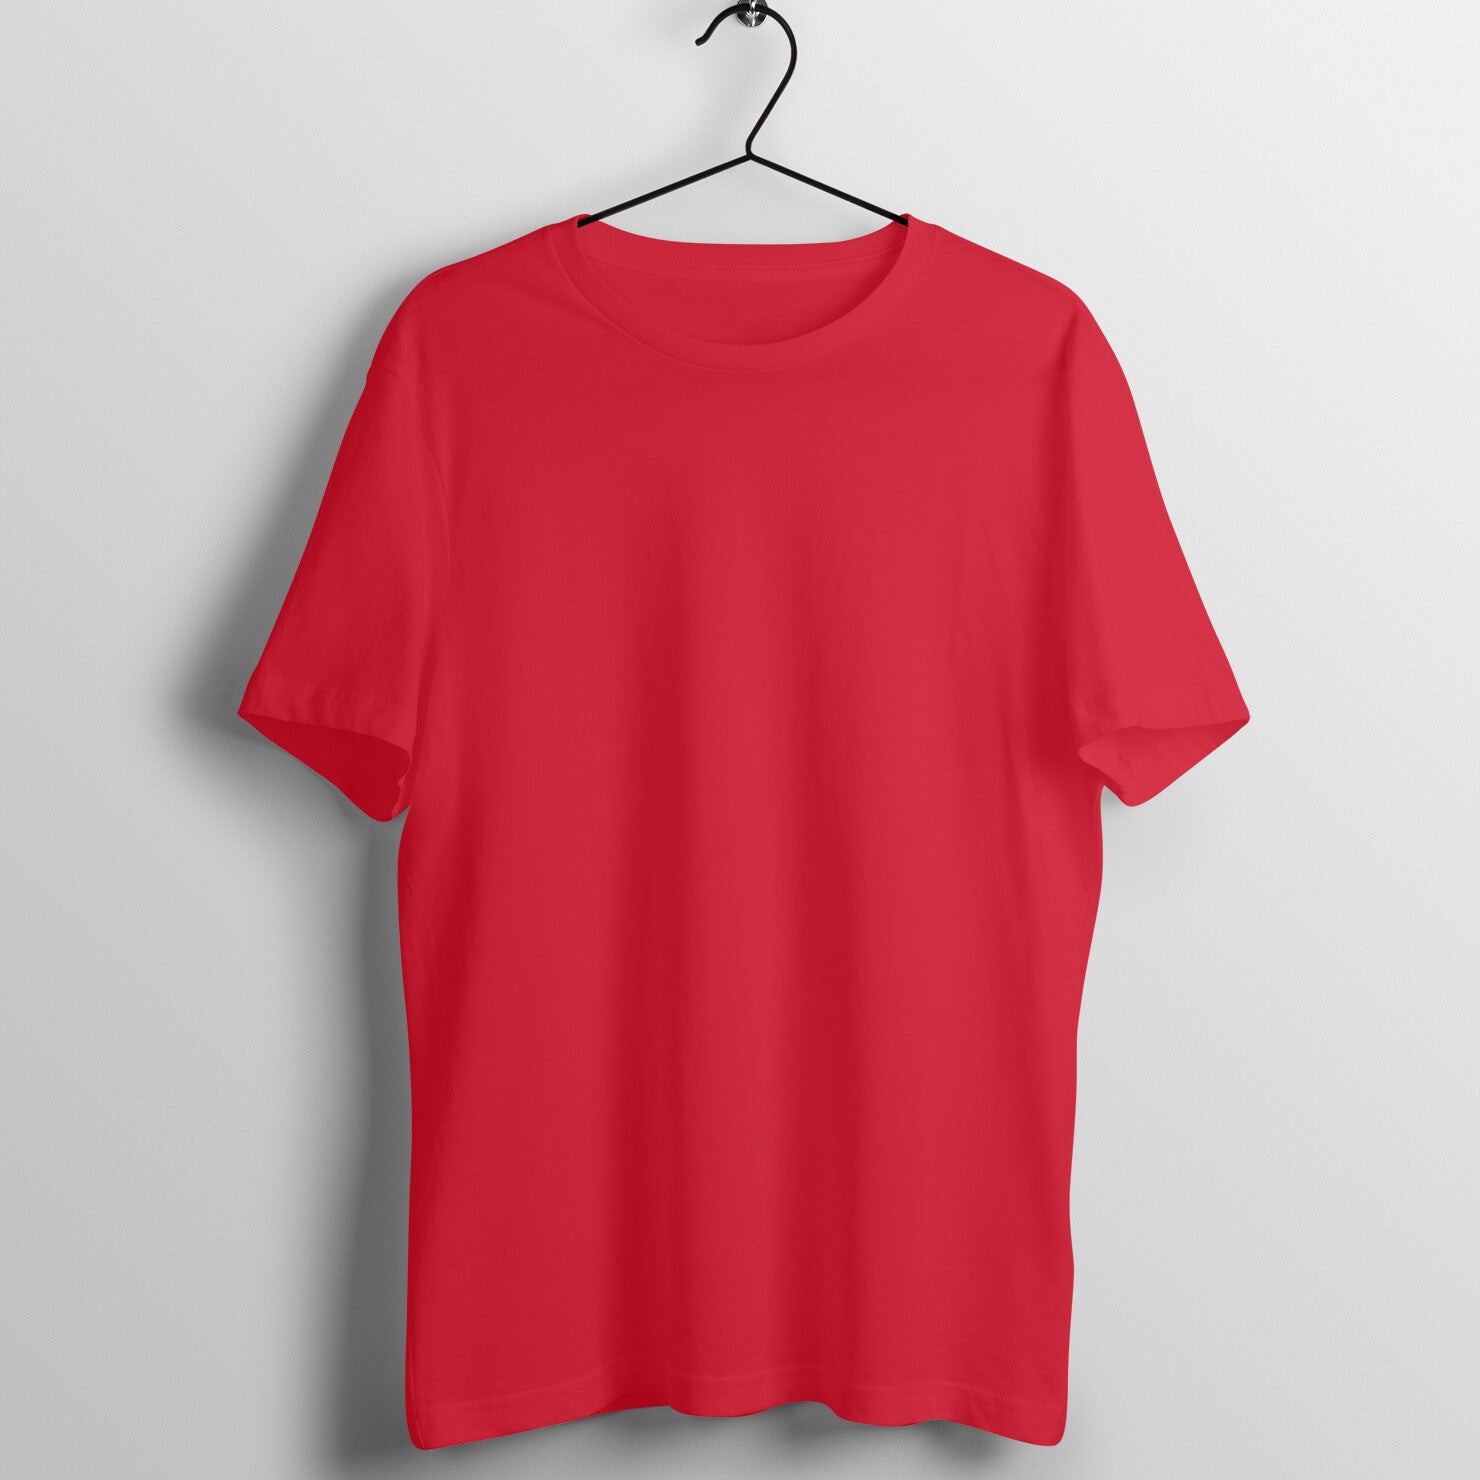 Men's Red T-shirt